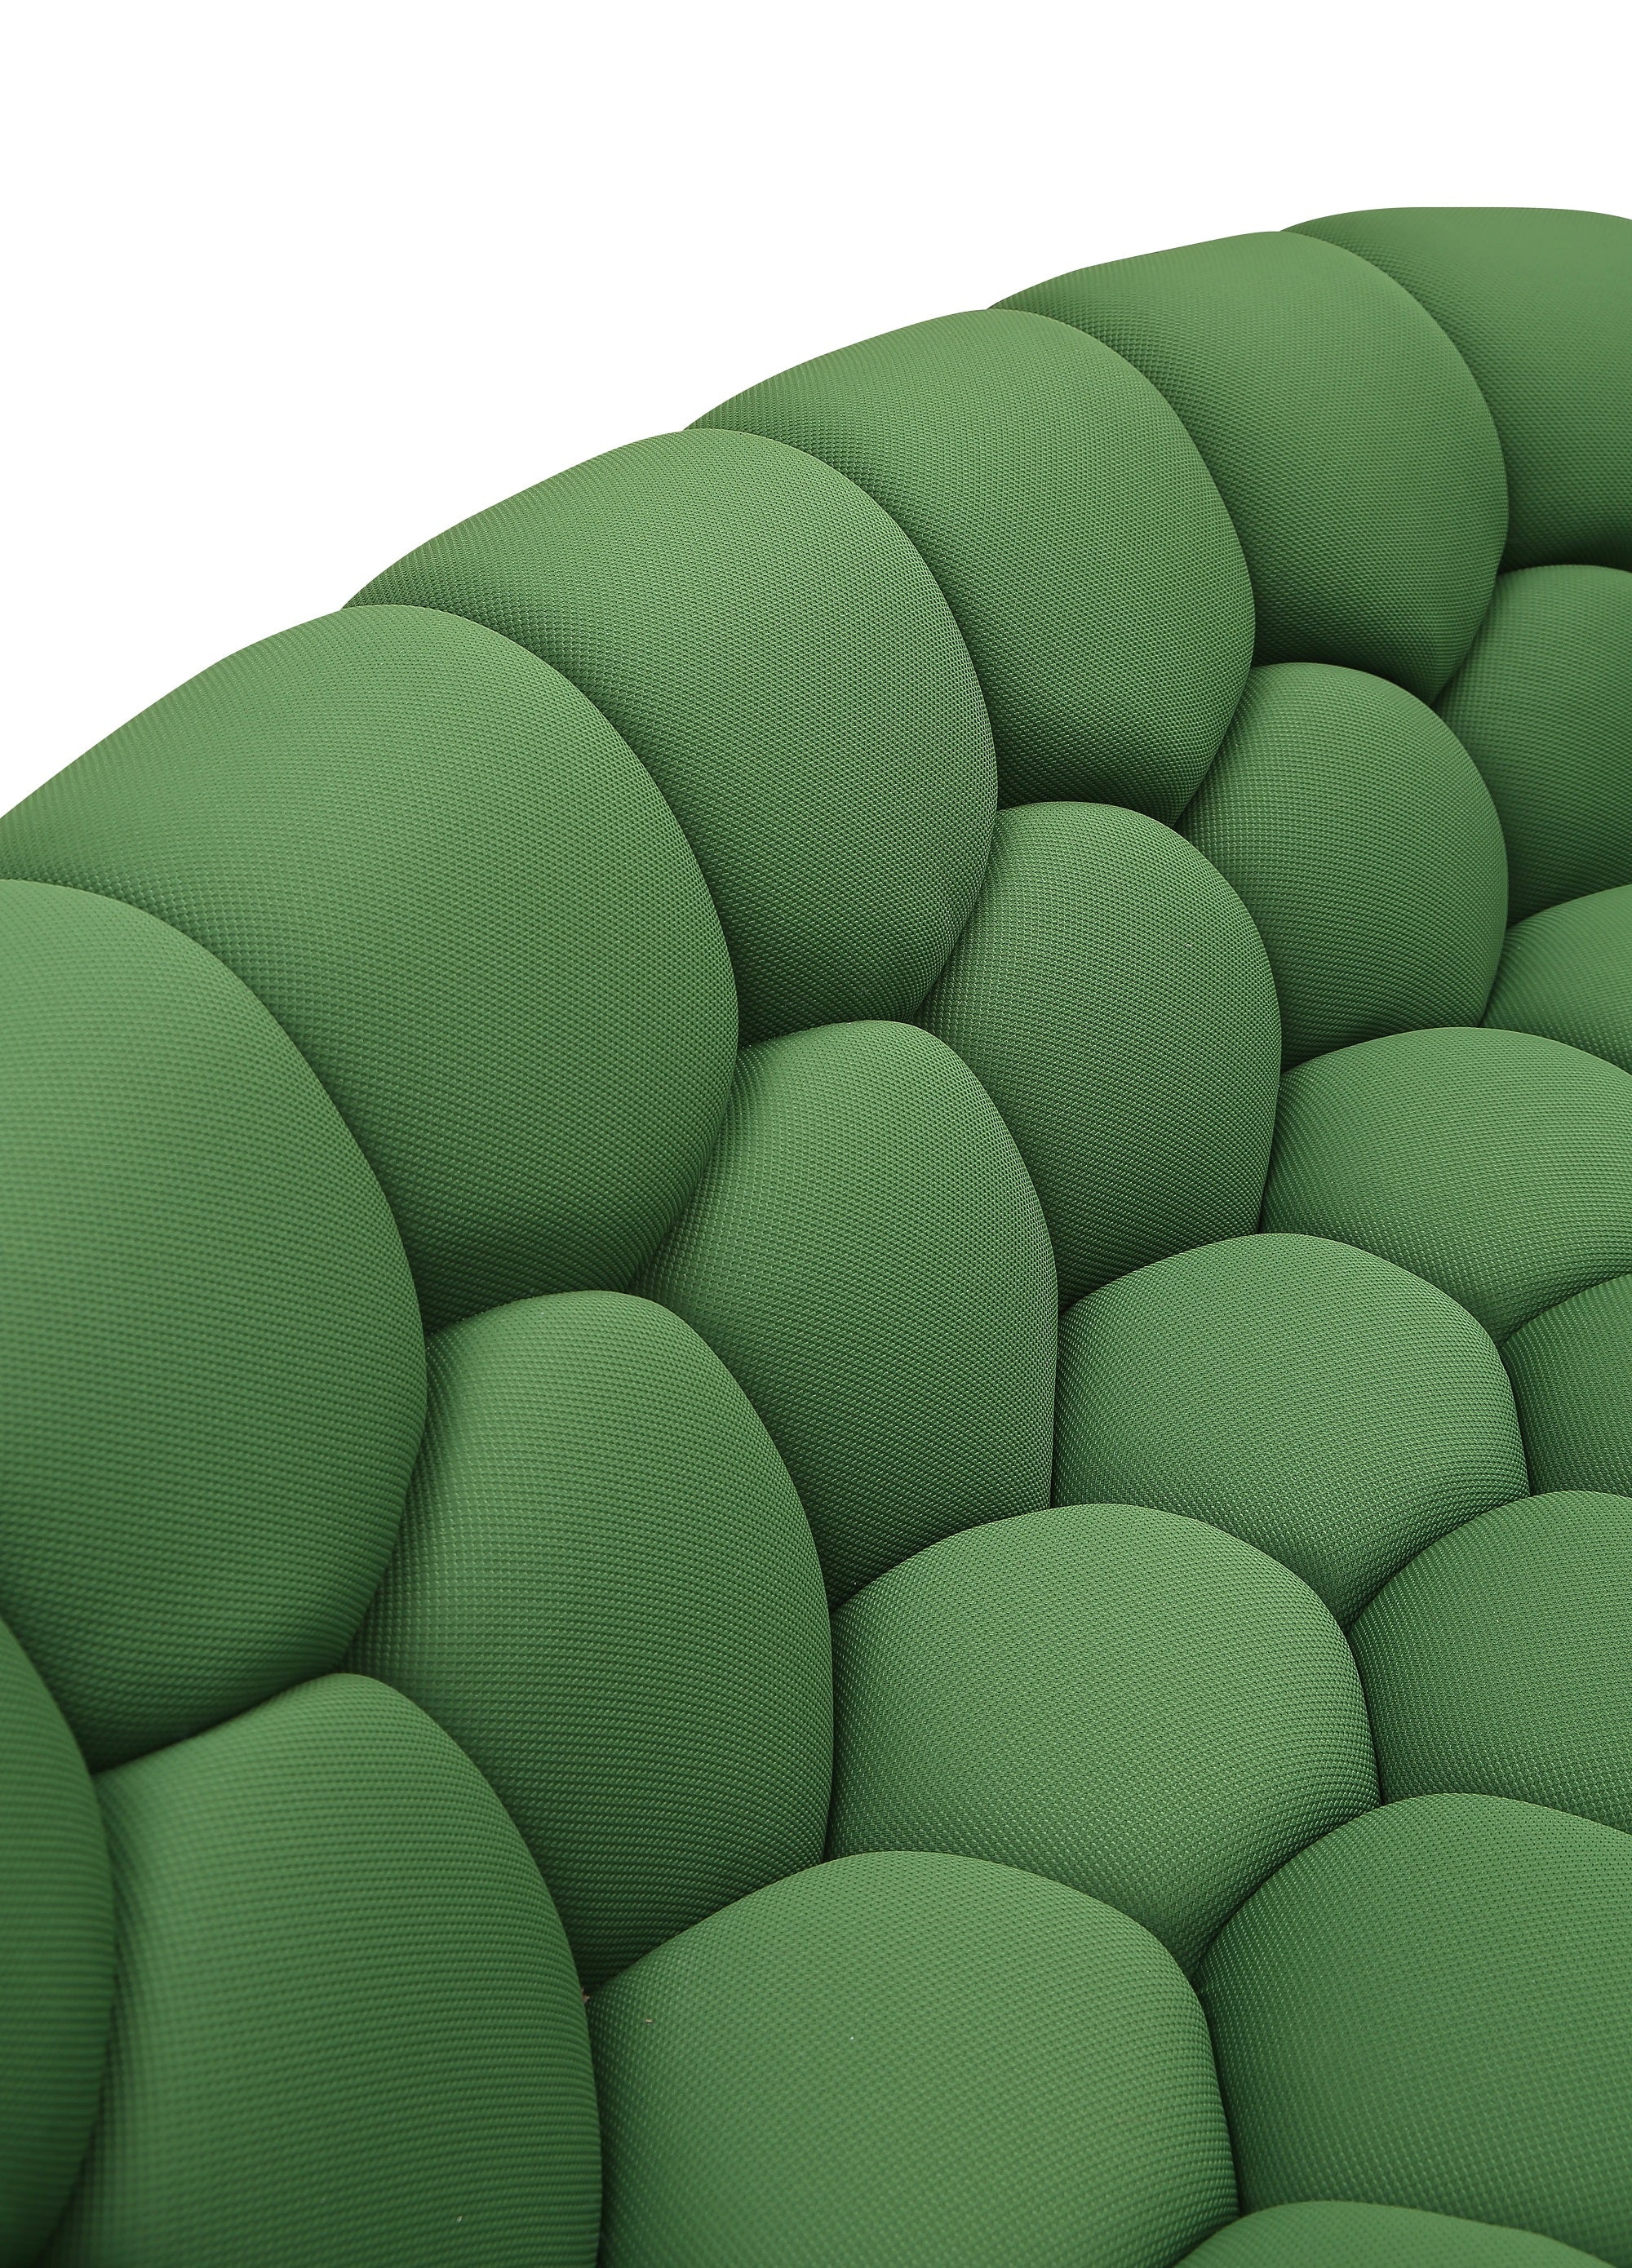 Fantasy Sofa Set in Green